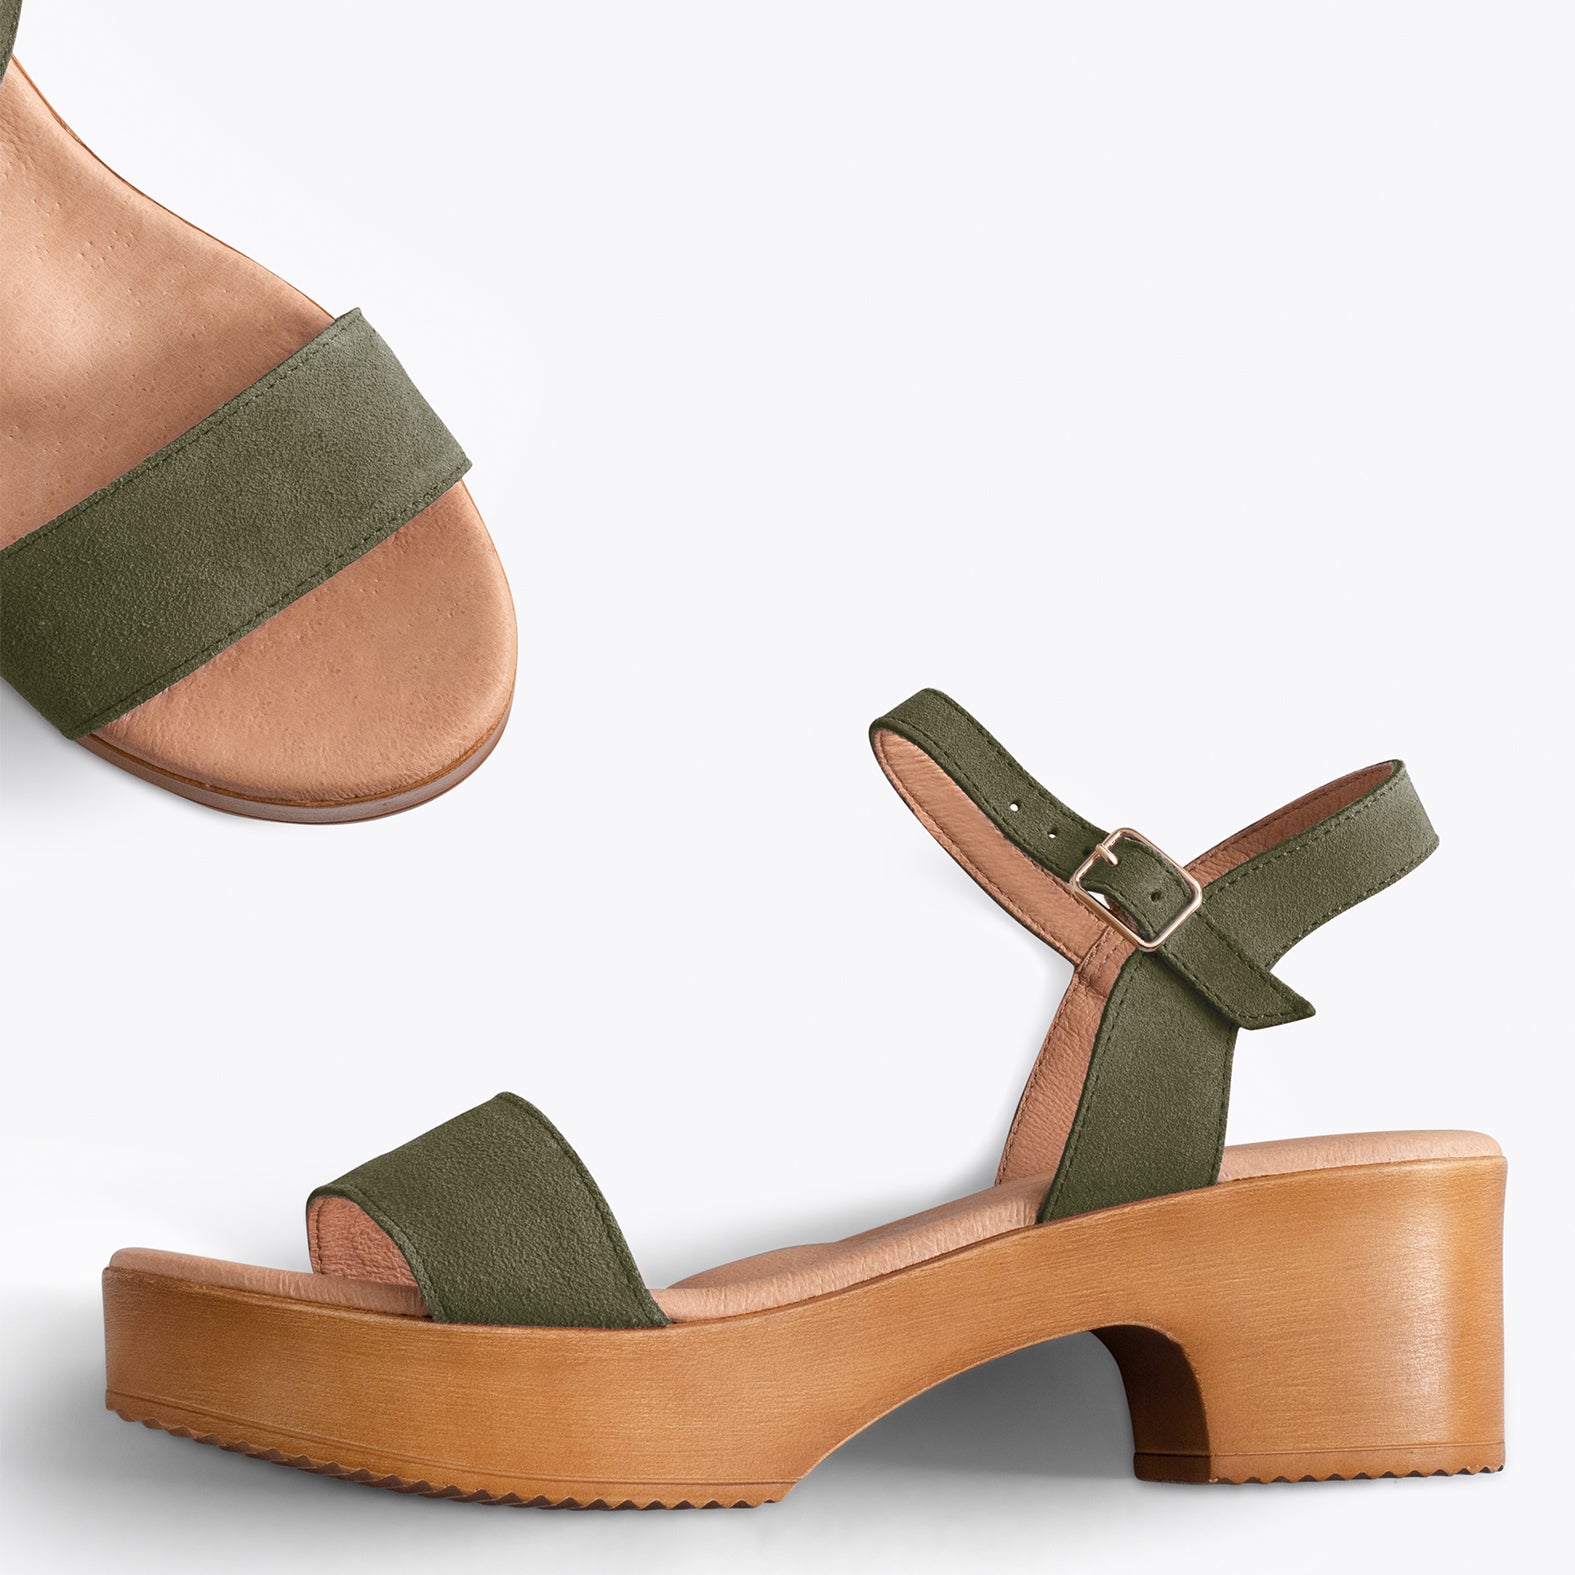 CALA – KHAKI sandals with platform